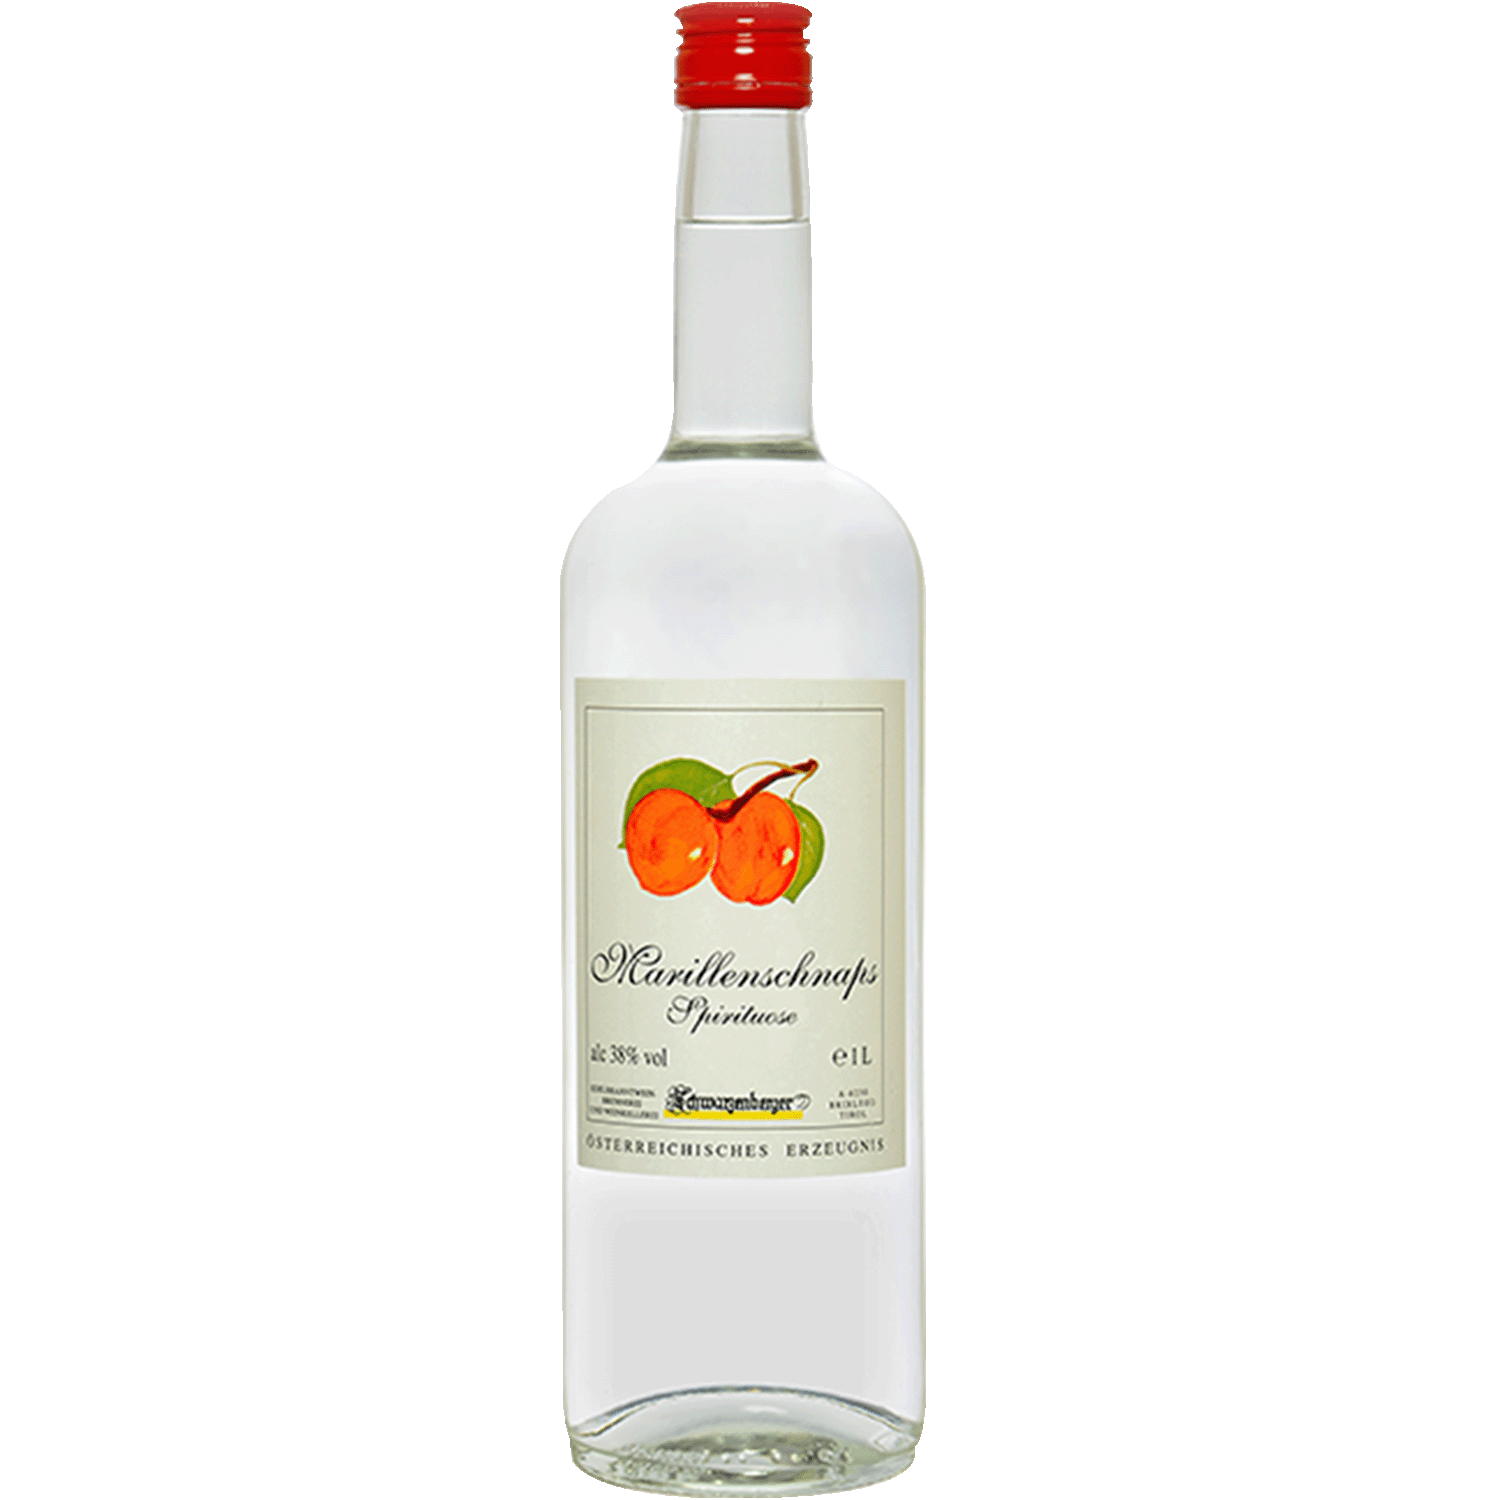 Original Apricot Schnapps in 1l bottle by Edelbrennerei Schwarzenberger